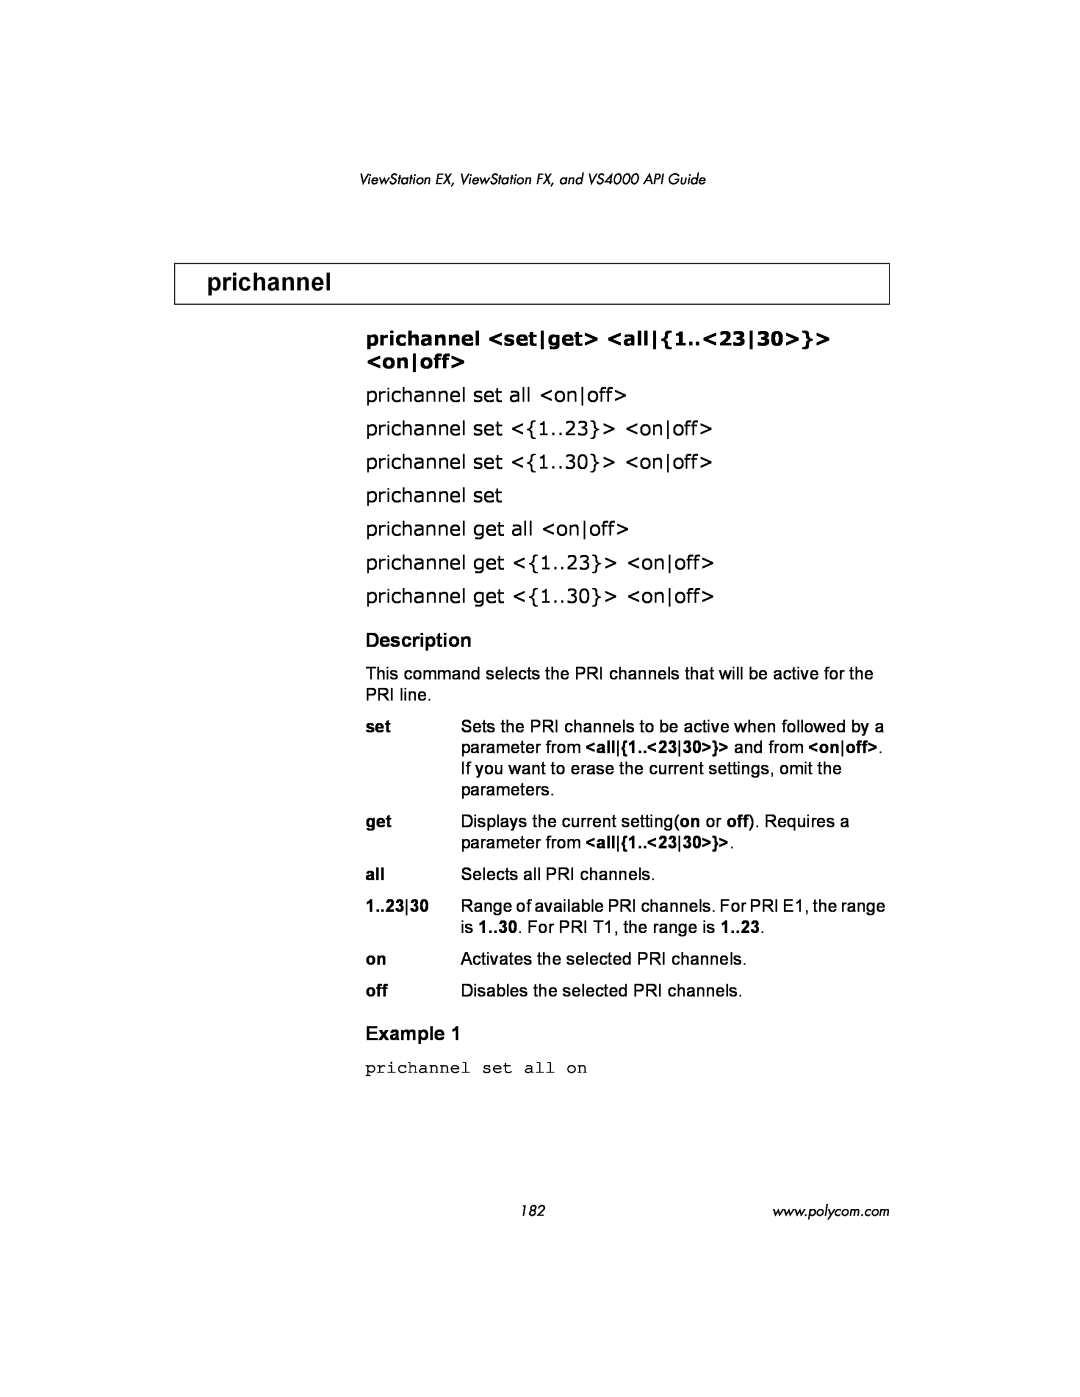 Polycom VIEWSTATION EX manual prichannel <set|get> <all|1..<23|30>> <on|off>, Description, Example 